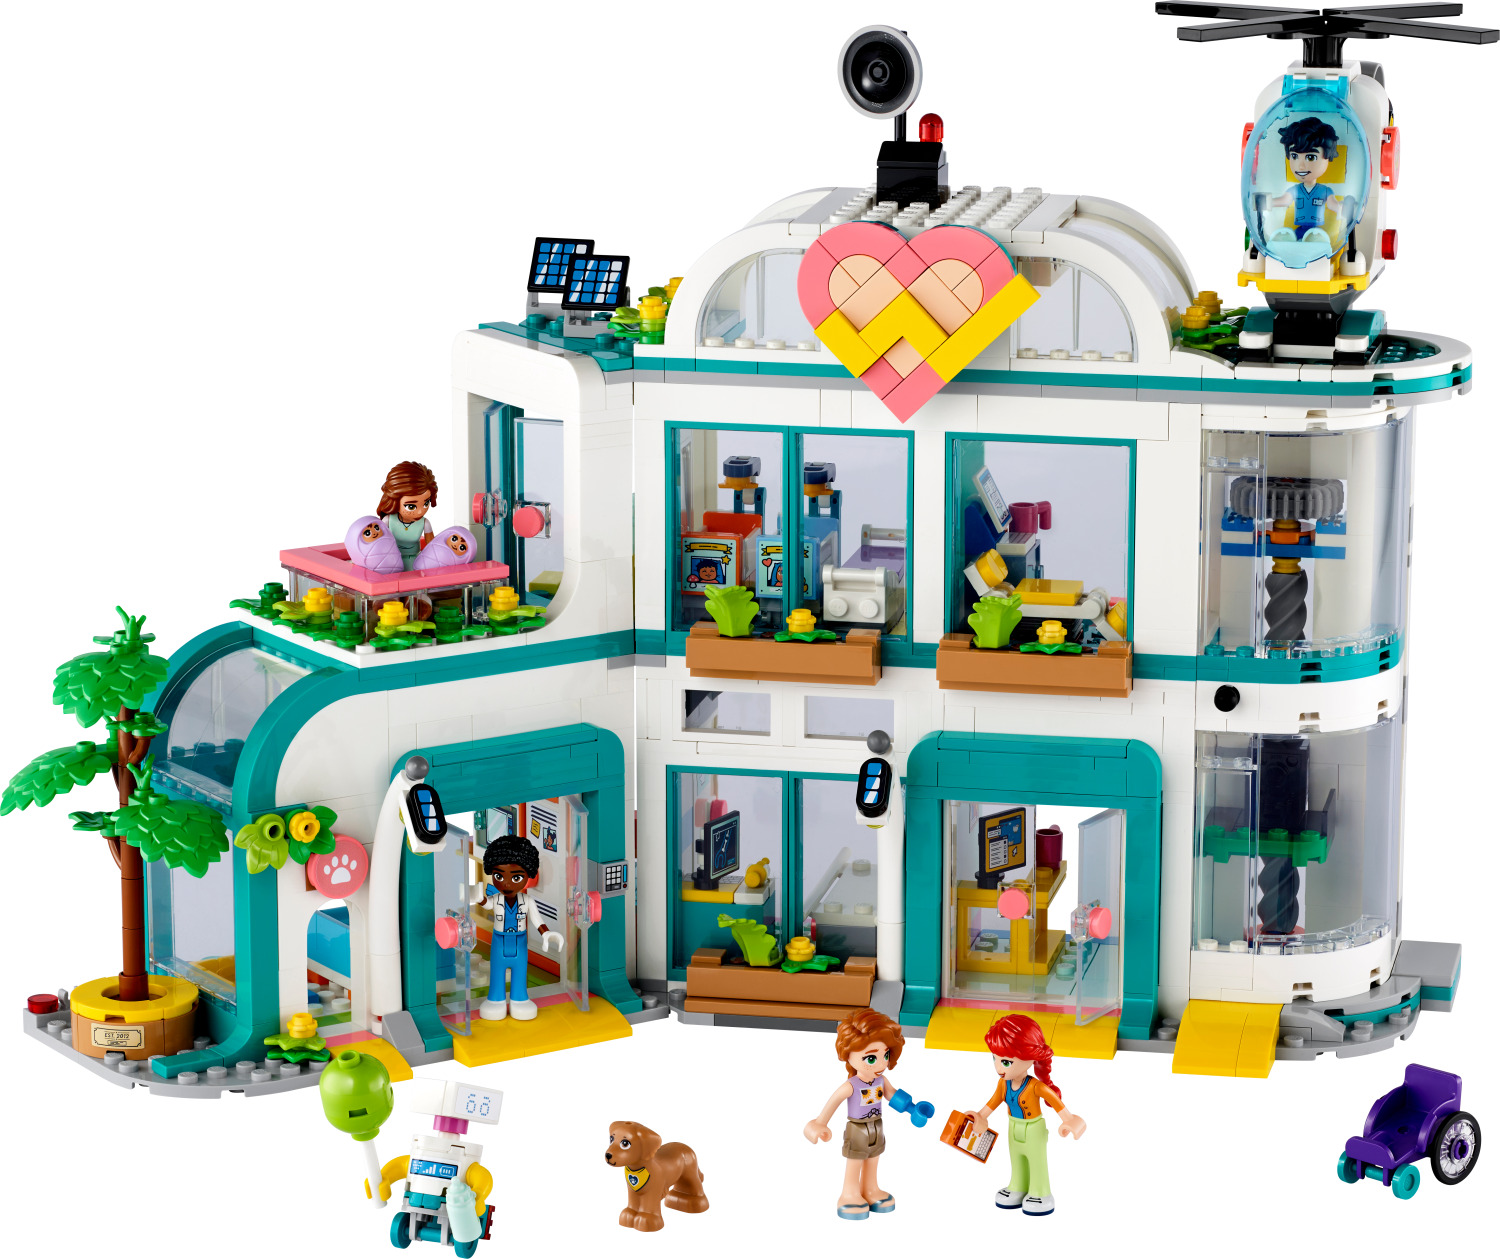 LEGO Friends: Heartlake City Hospital